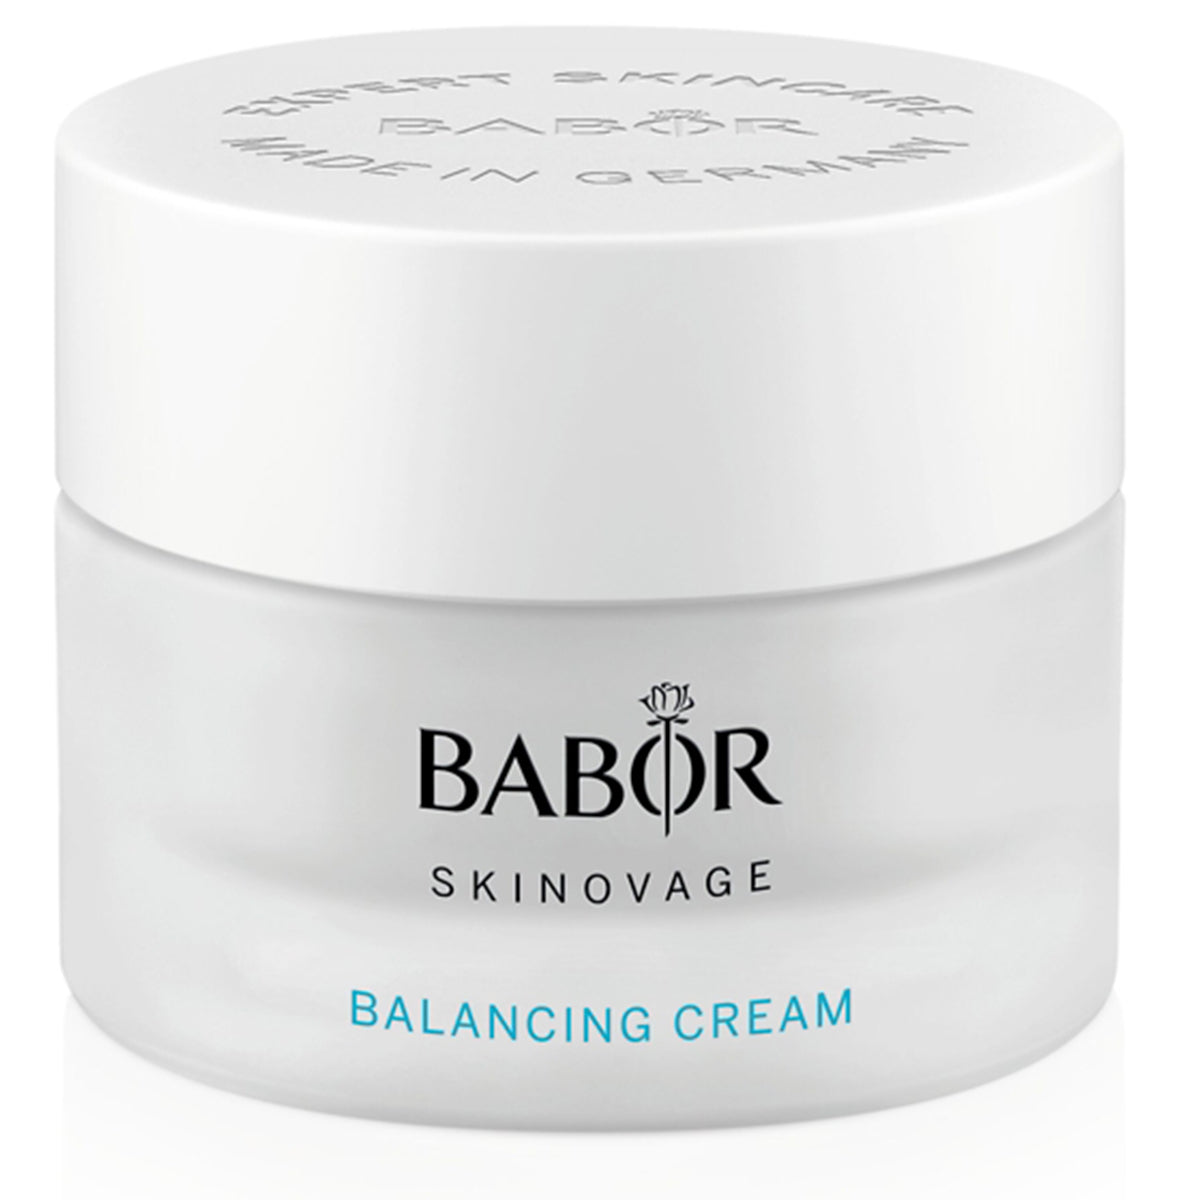 Skinovage Balancing Cream 50ml